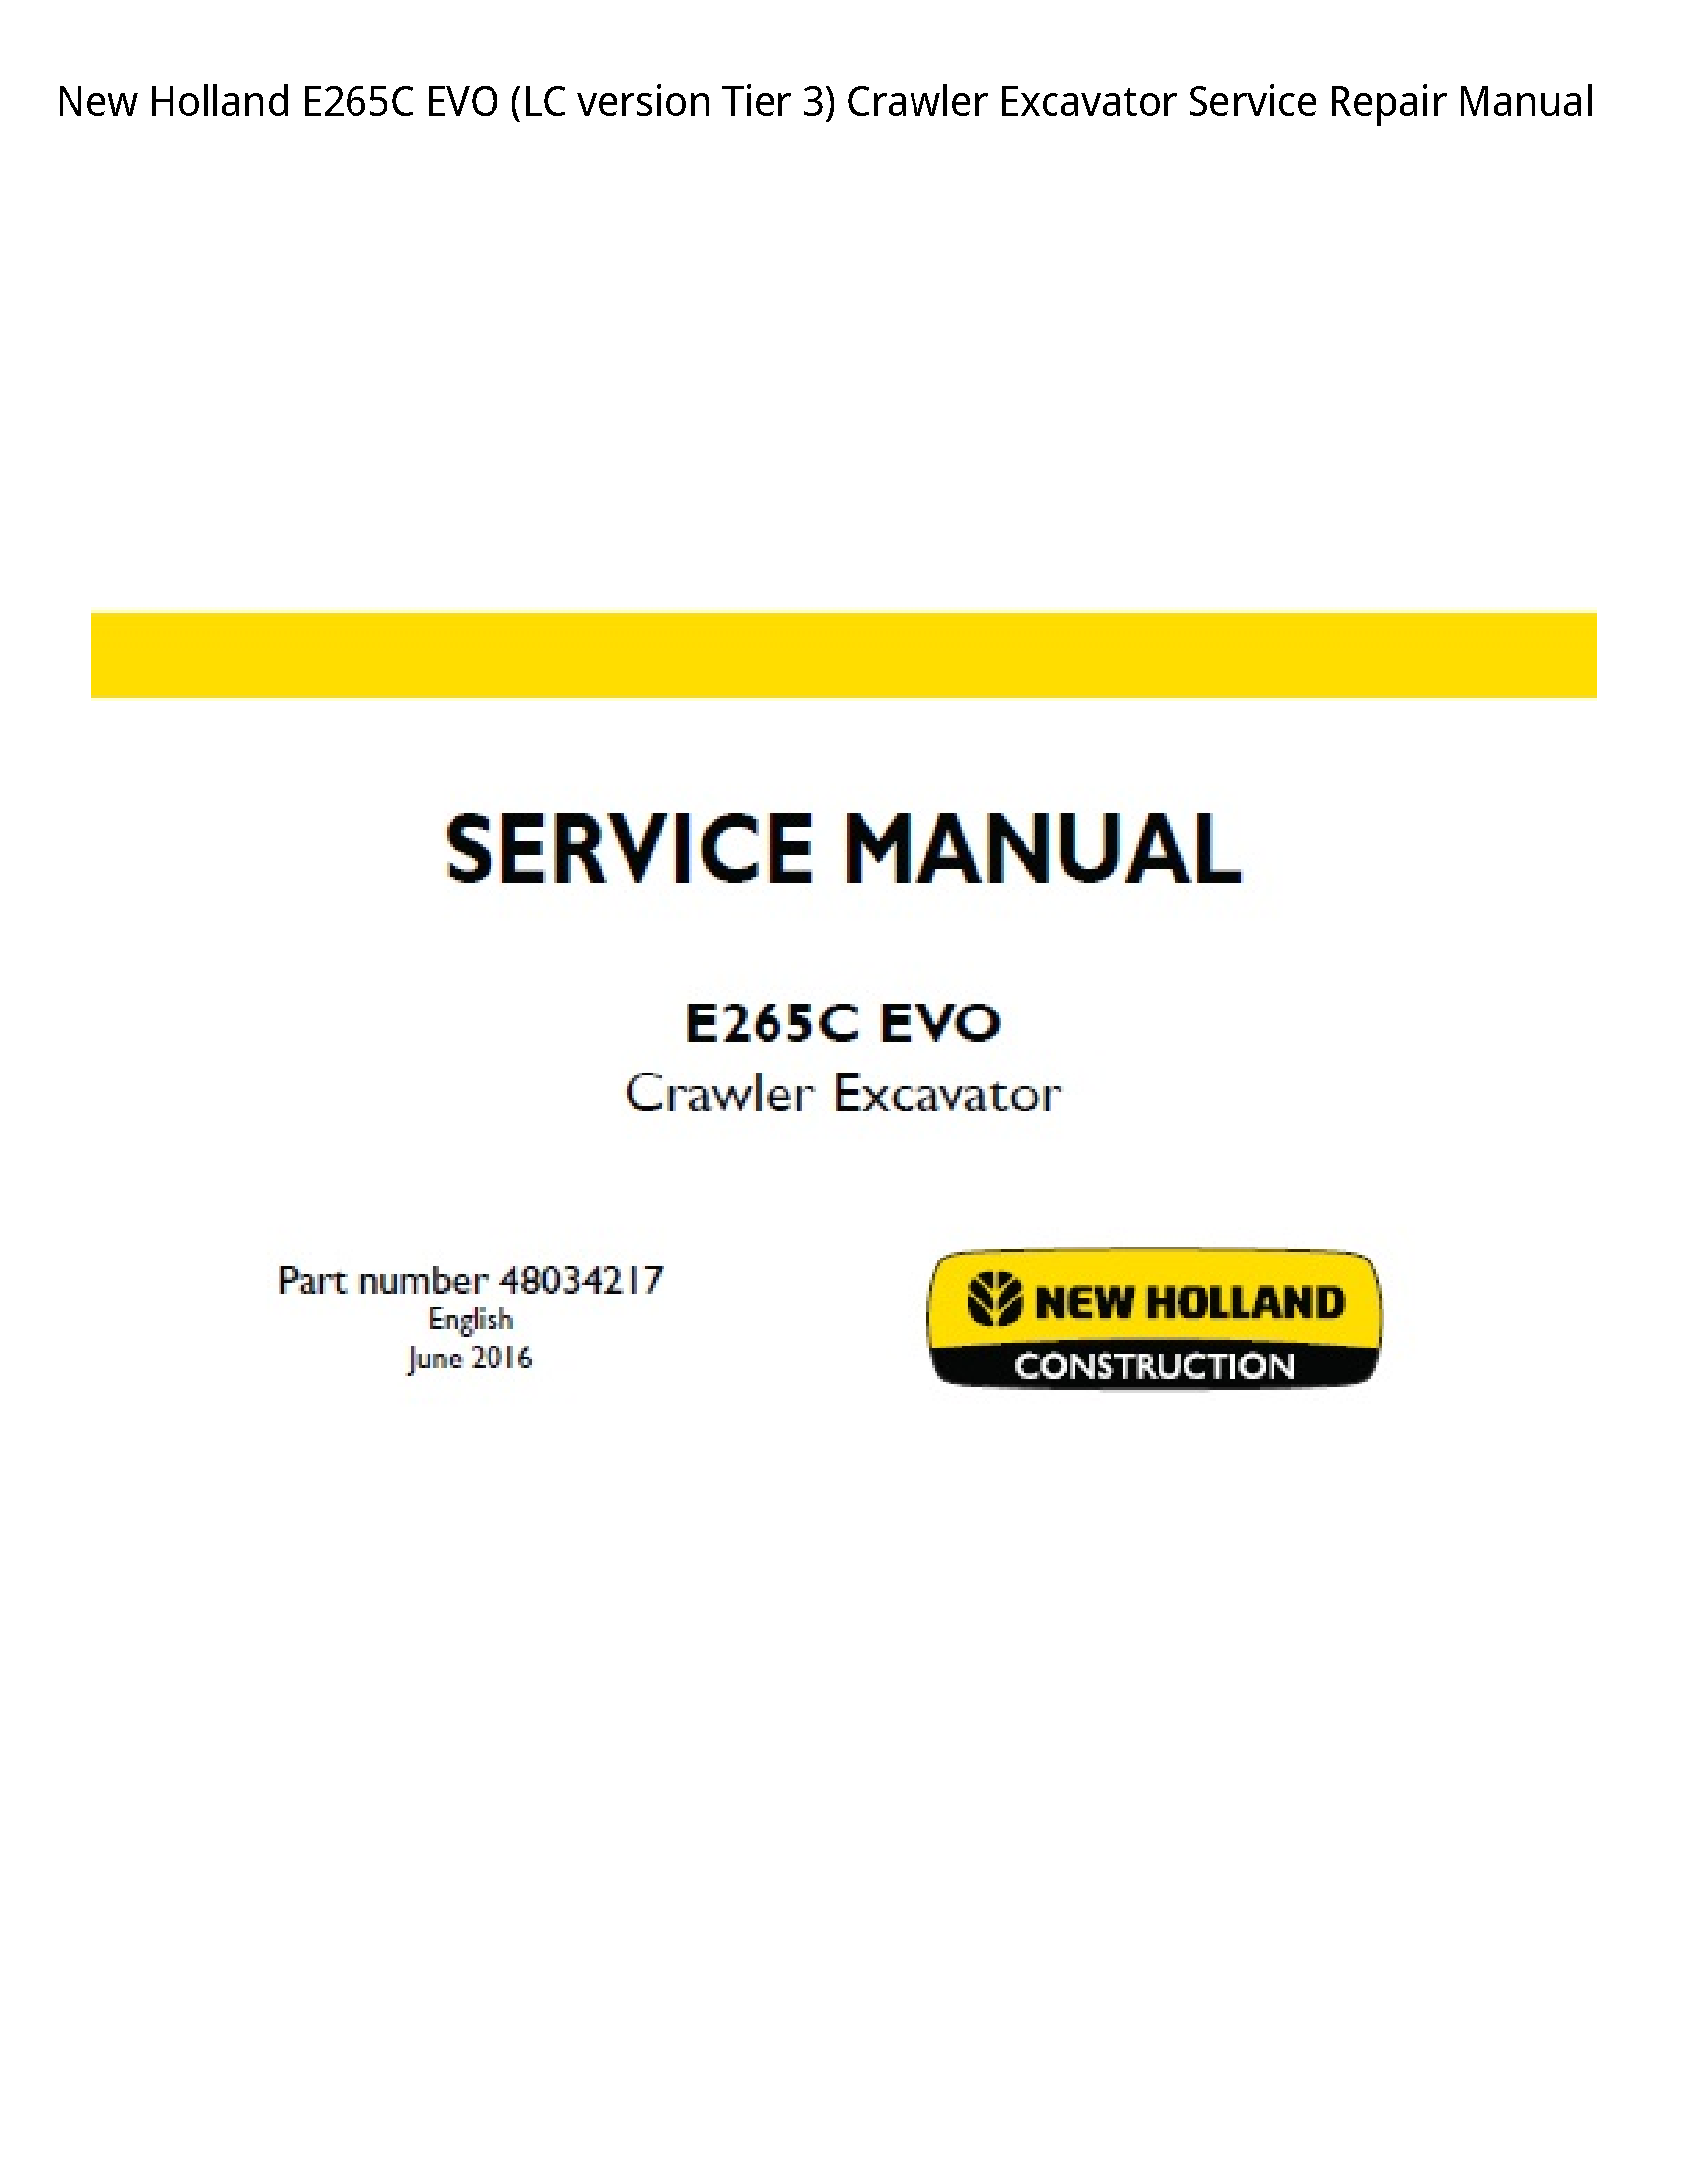 New Holland E265C EVO (LC version Tier Crawler Excavator manual